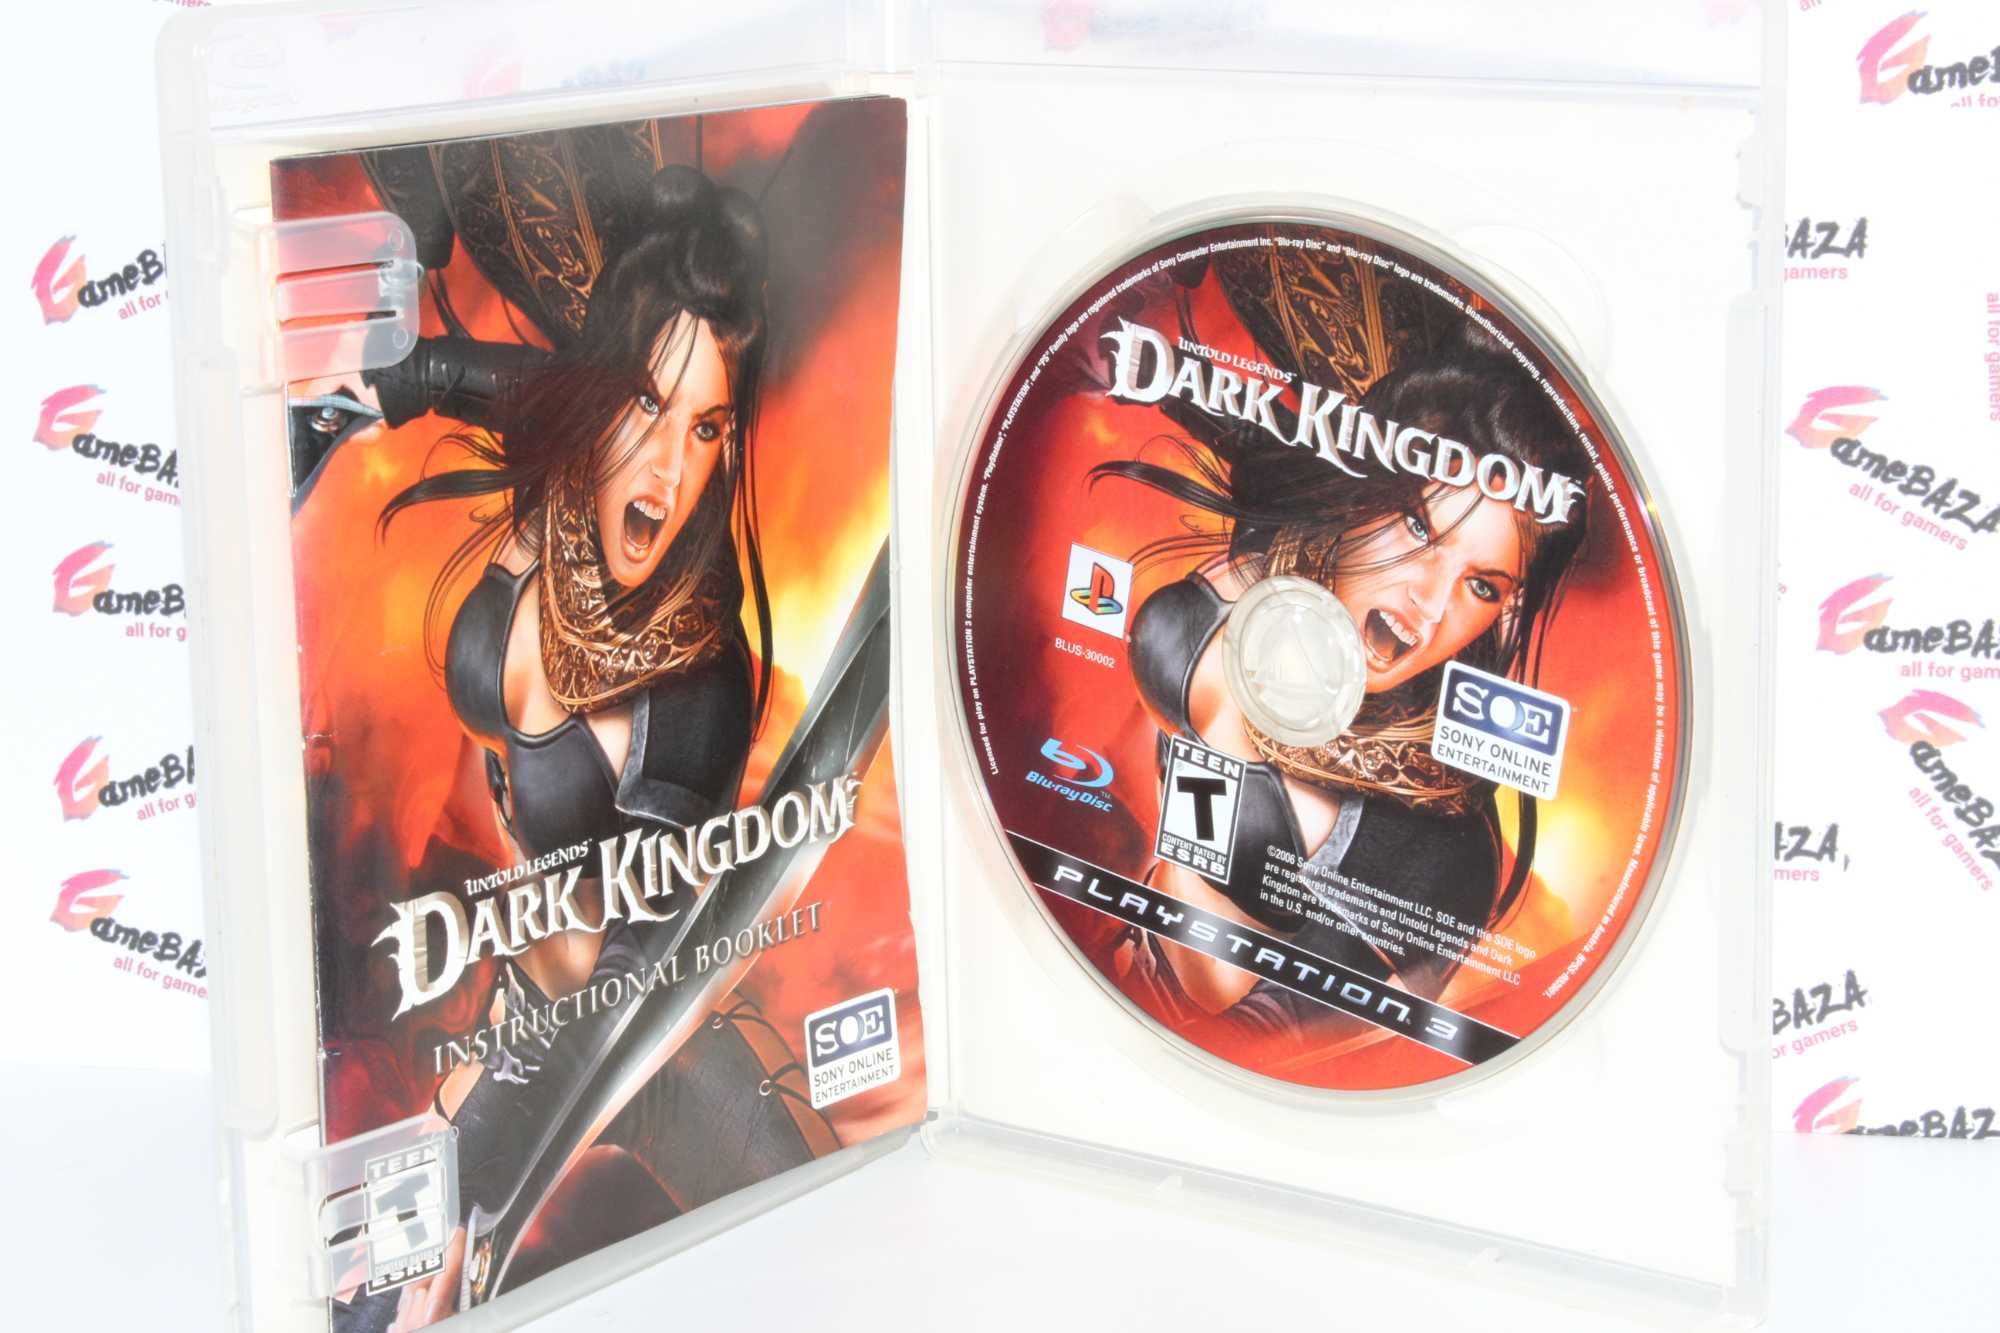 Untold Legends: Dark Kingdom PS3 GameBAZA